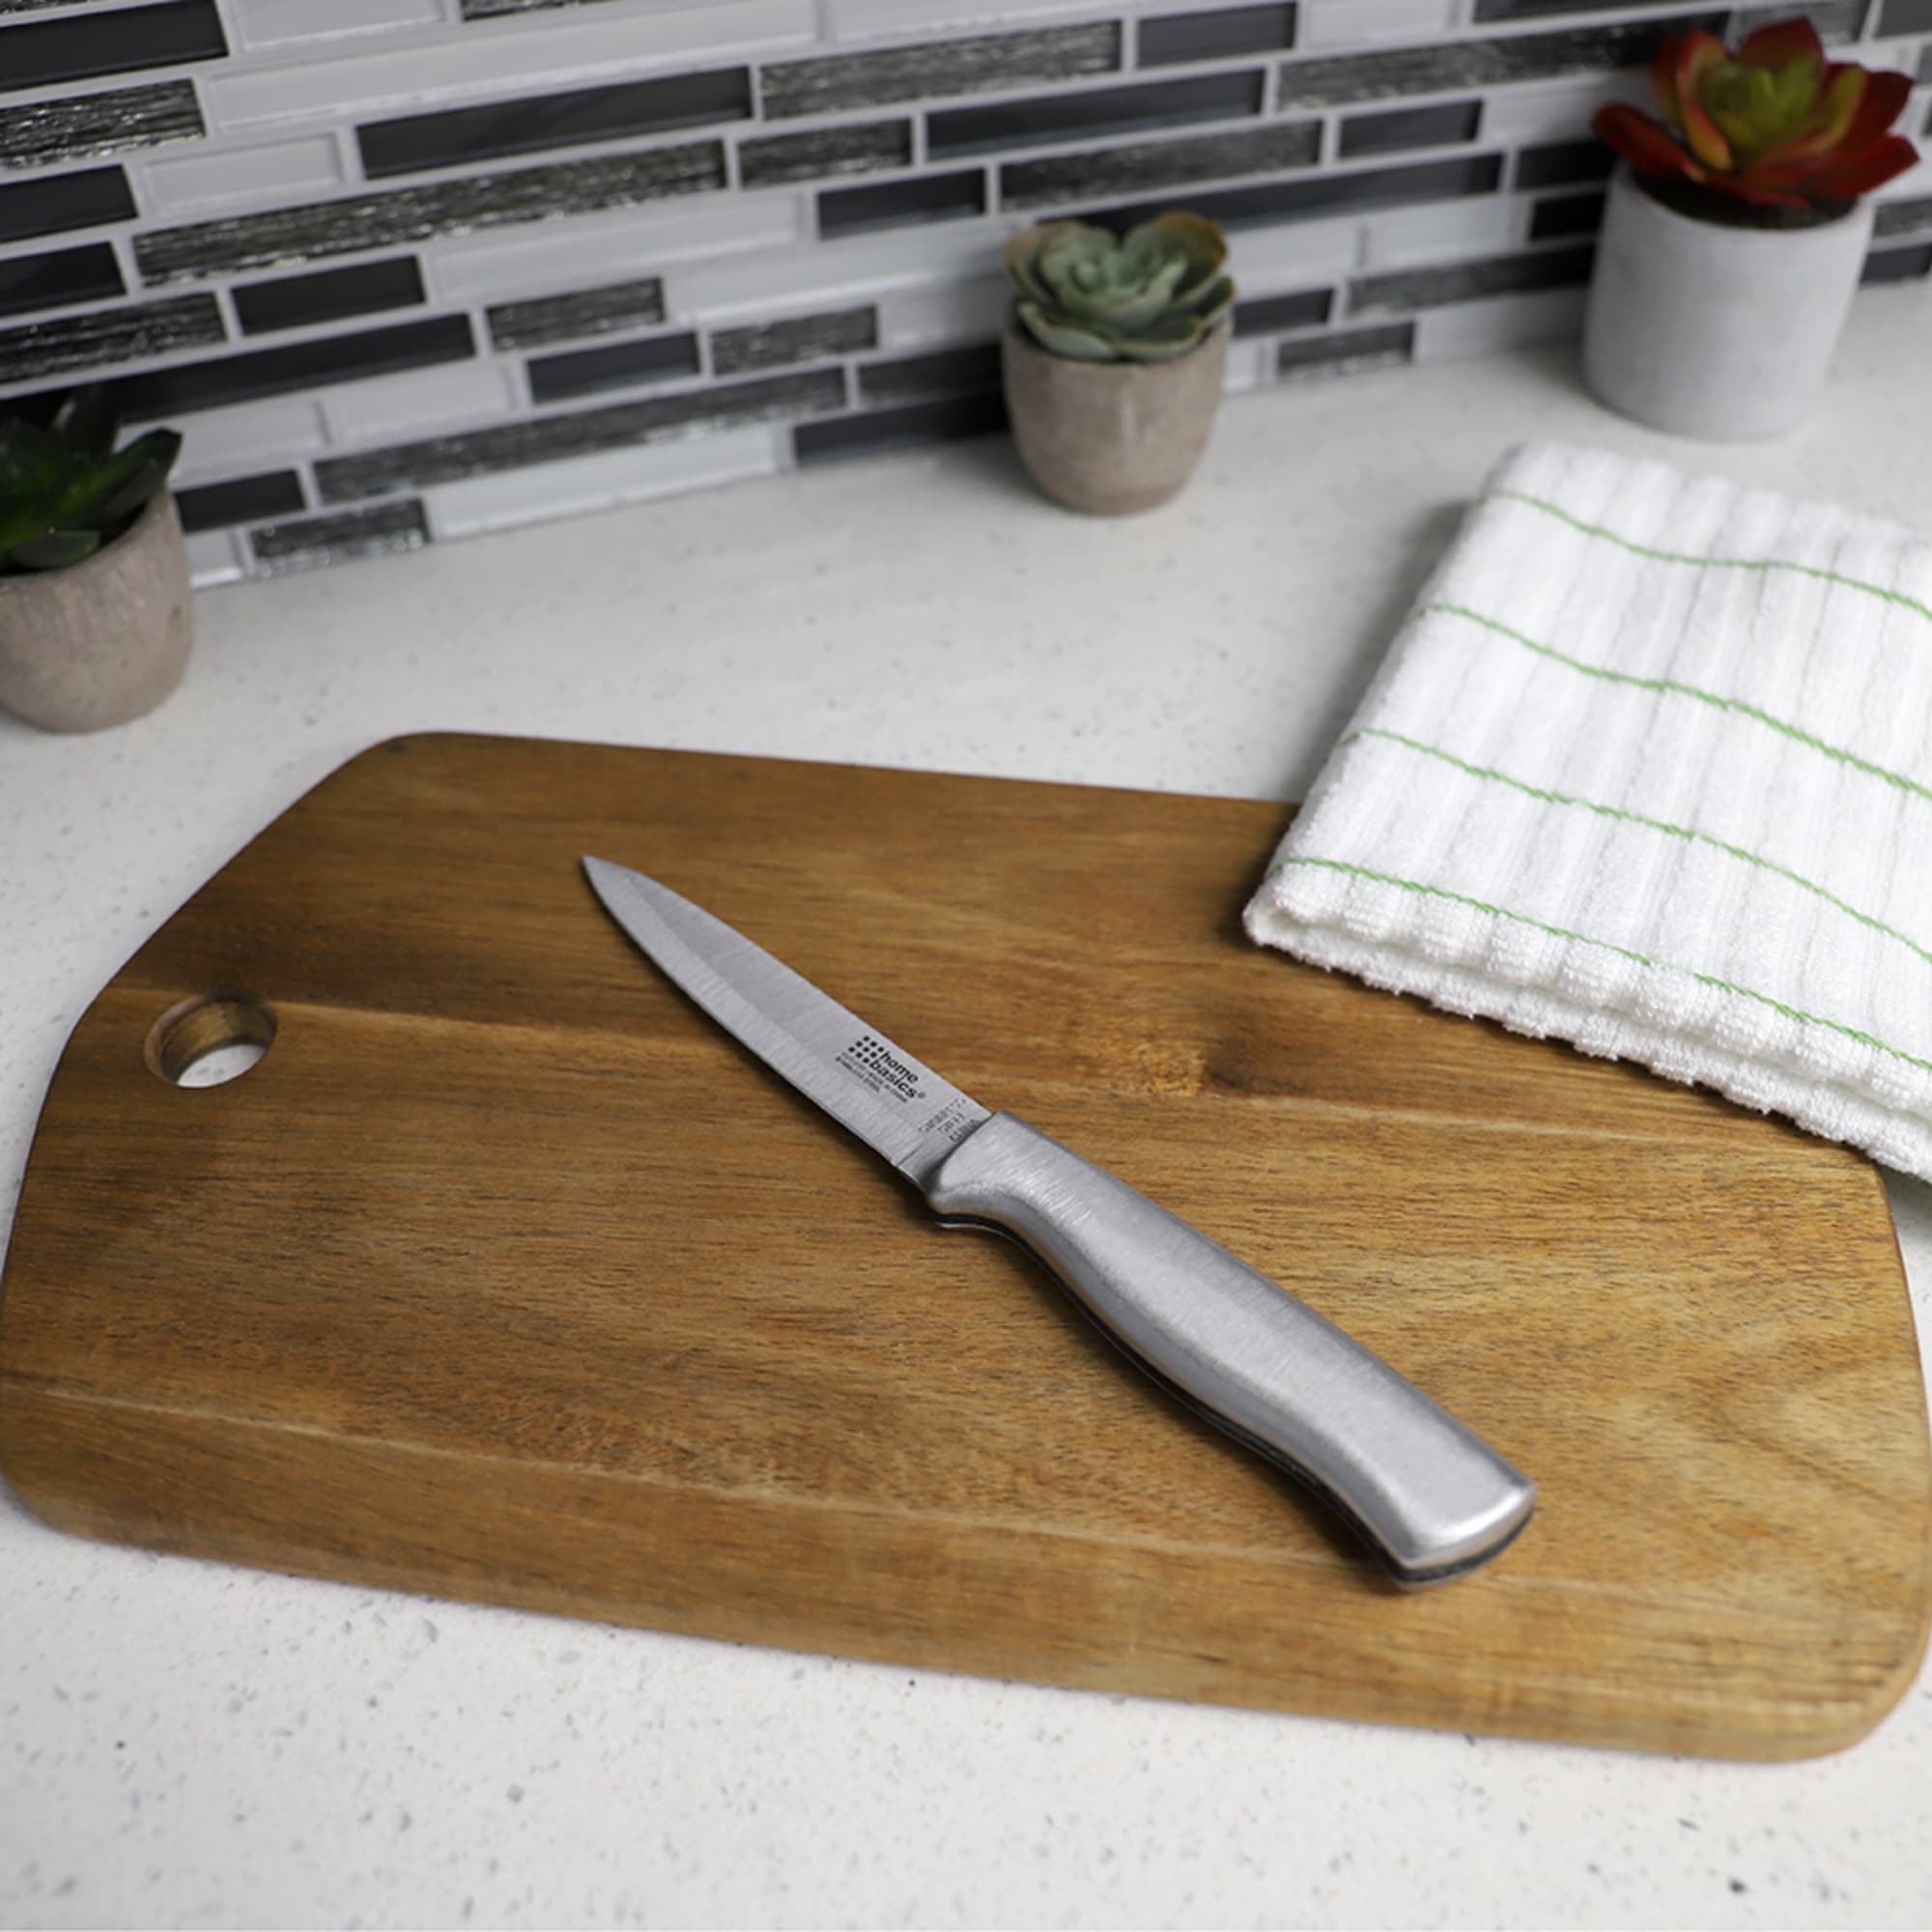 Home Basics Stainless Steel Knife Set with Knife Blade Sharpener, Black $5.00 EACH, CASE PACK OF 12